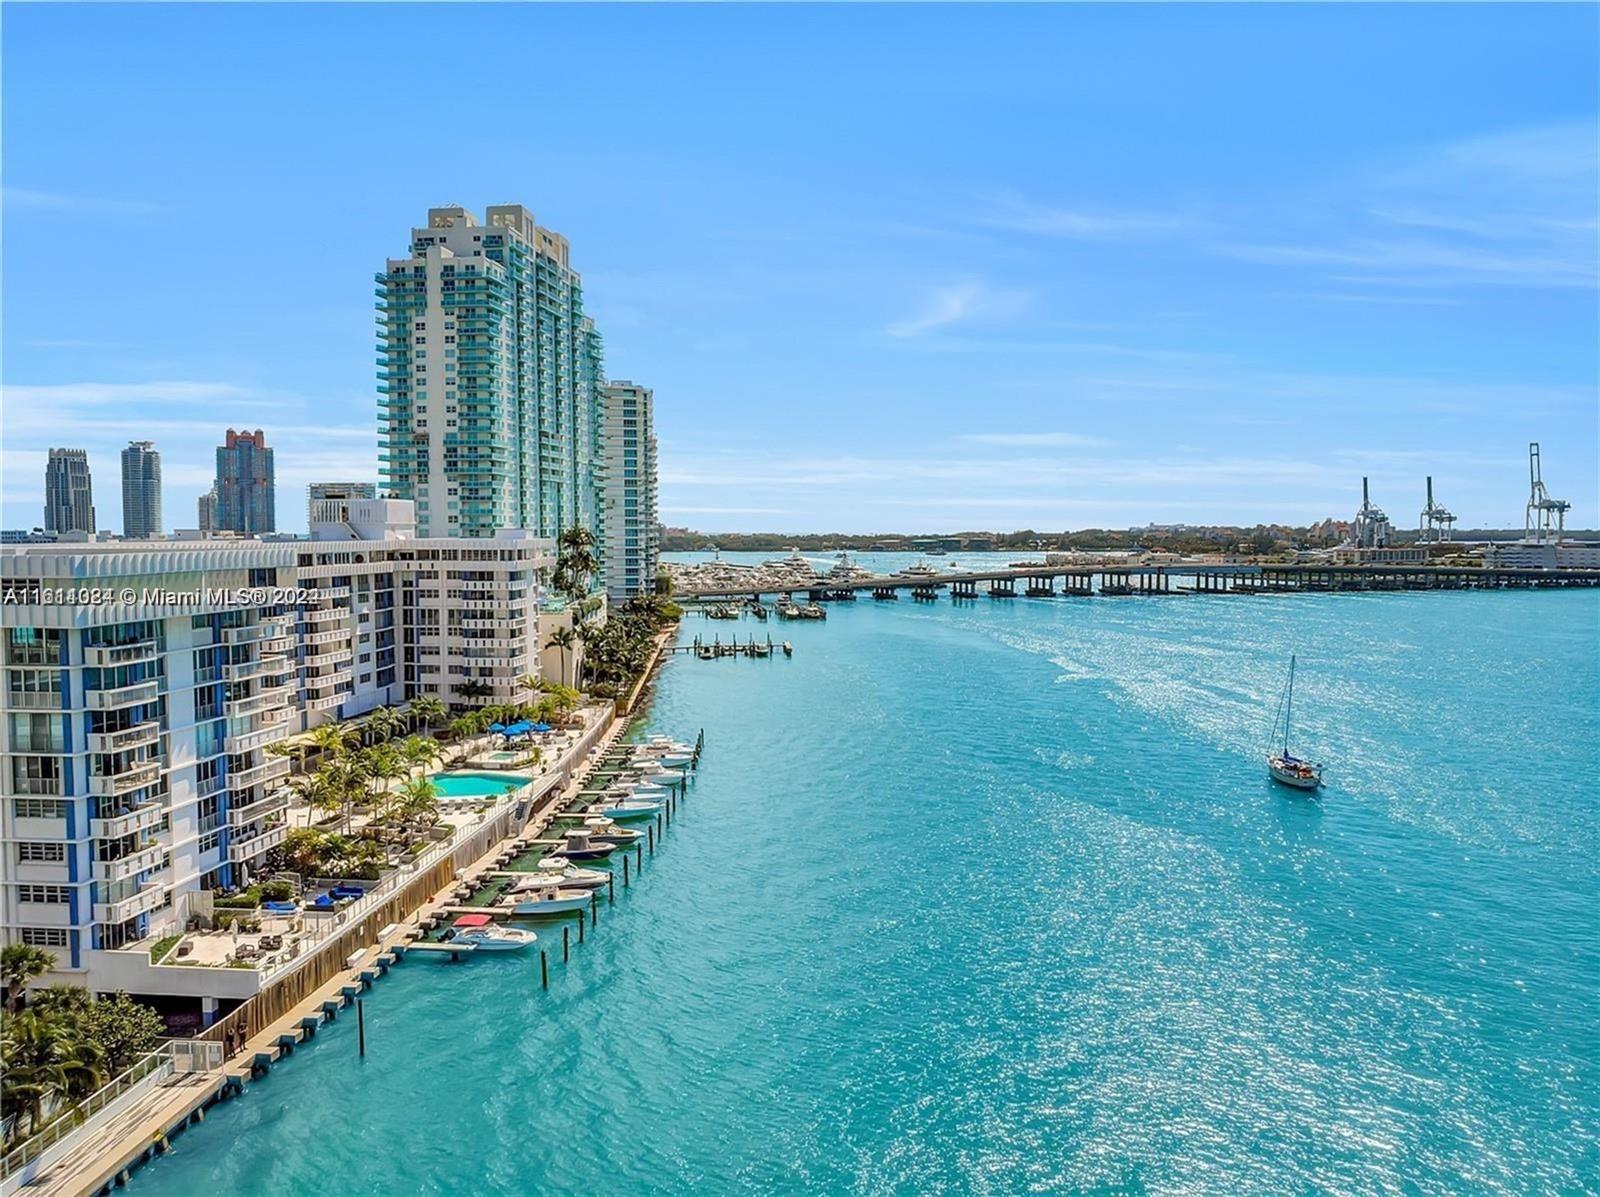 Rental Property at 800 West Ave 242, Miami Beach, Miami-Dade County, Florida - Bathrooms: 1  - $2,350 MO.